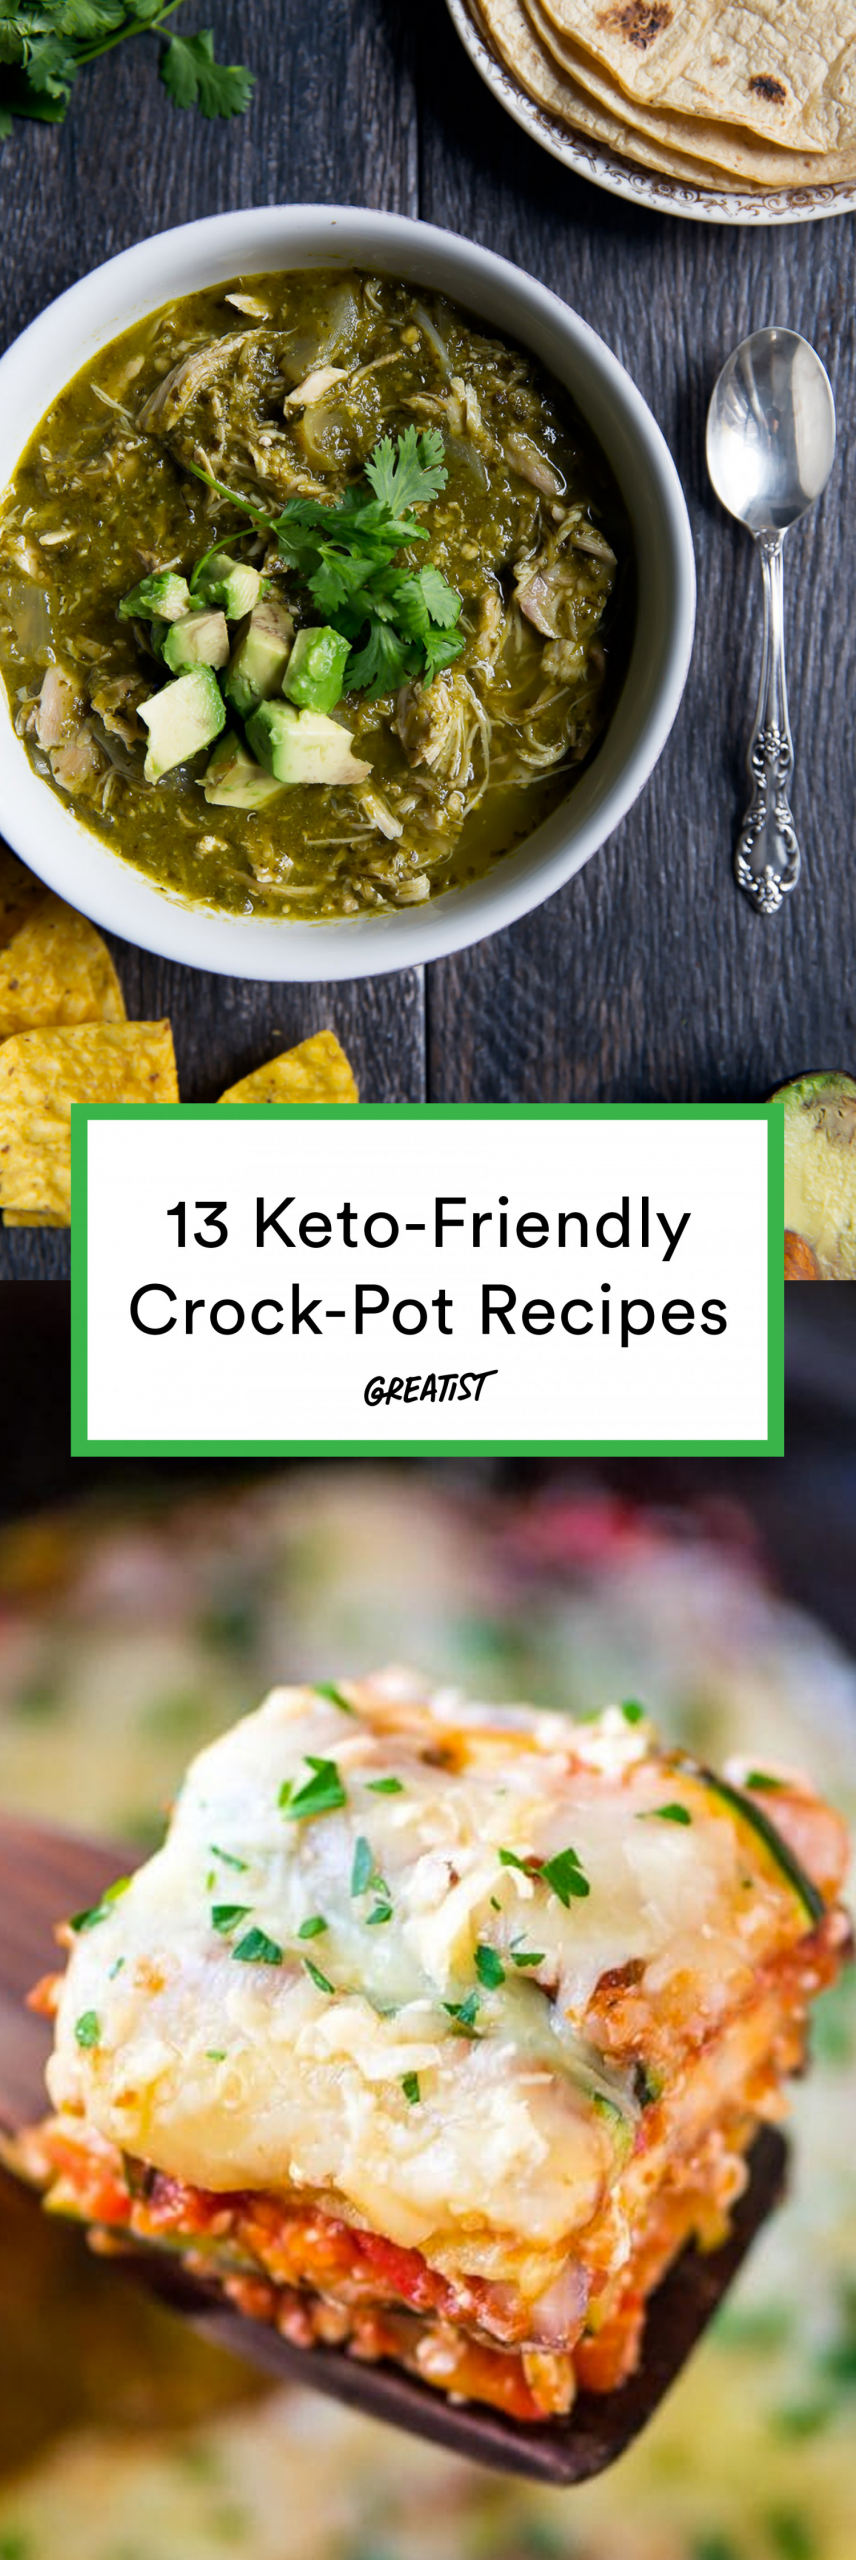 Keto Diet Recipes Dinners Crock Pot
 13 Keto Crock Pot Recipes for Easy Low Carb Meals